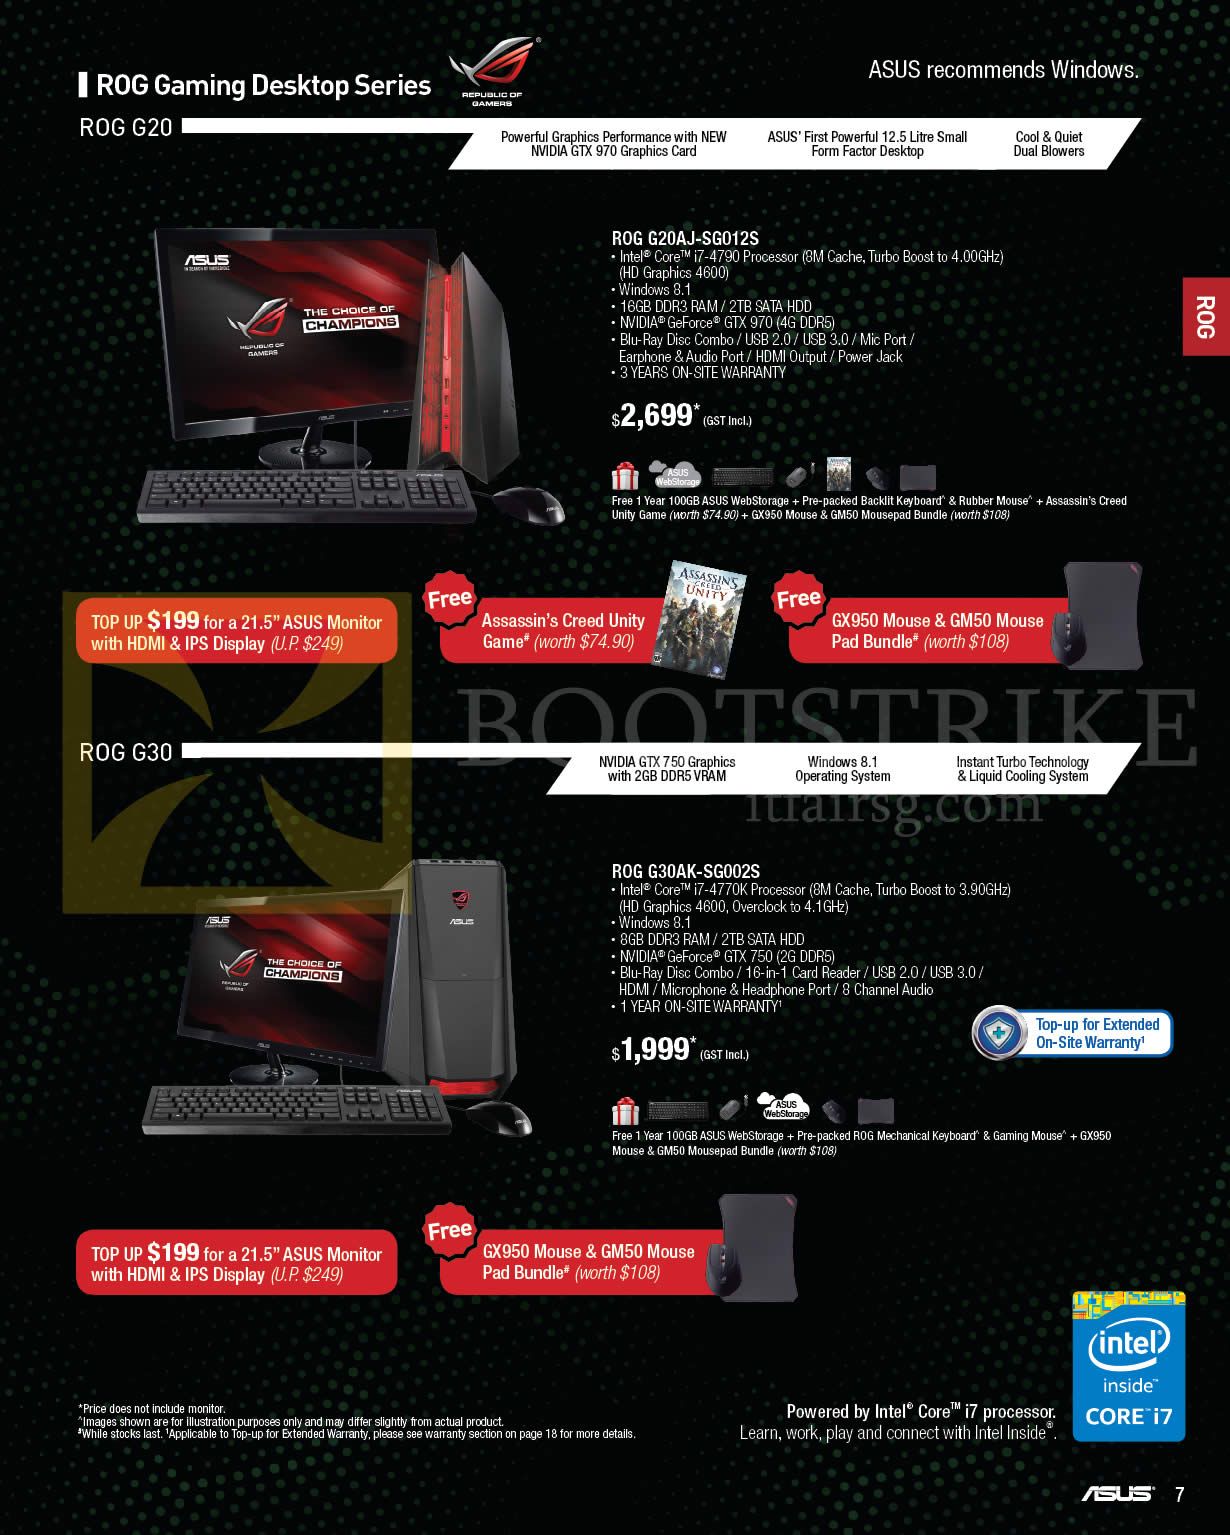 IT SHOW 2015 price list image brochure of ASUS Desktop PCs ROG G20, G30, ROG G20AJ-SG012S, ROG G30AK-SG002S